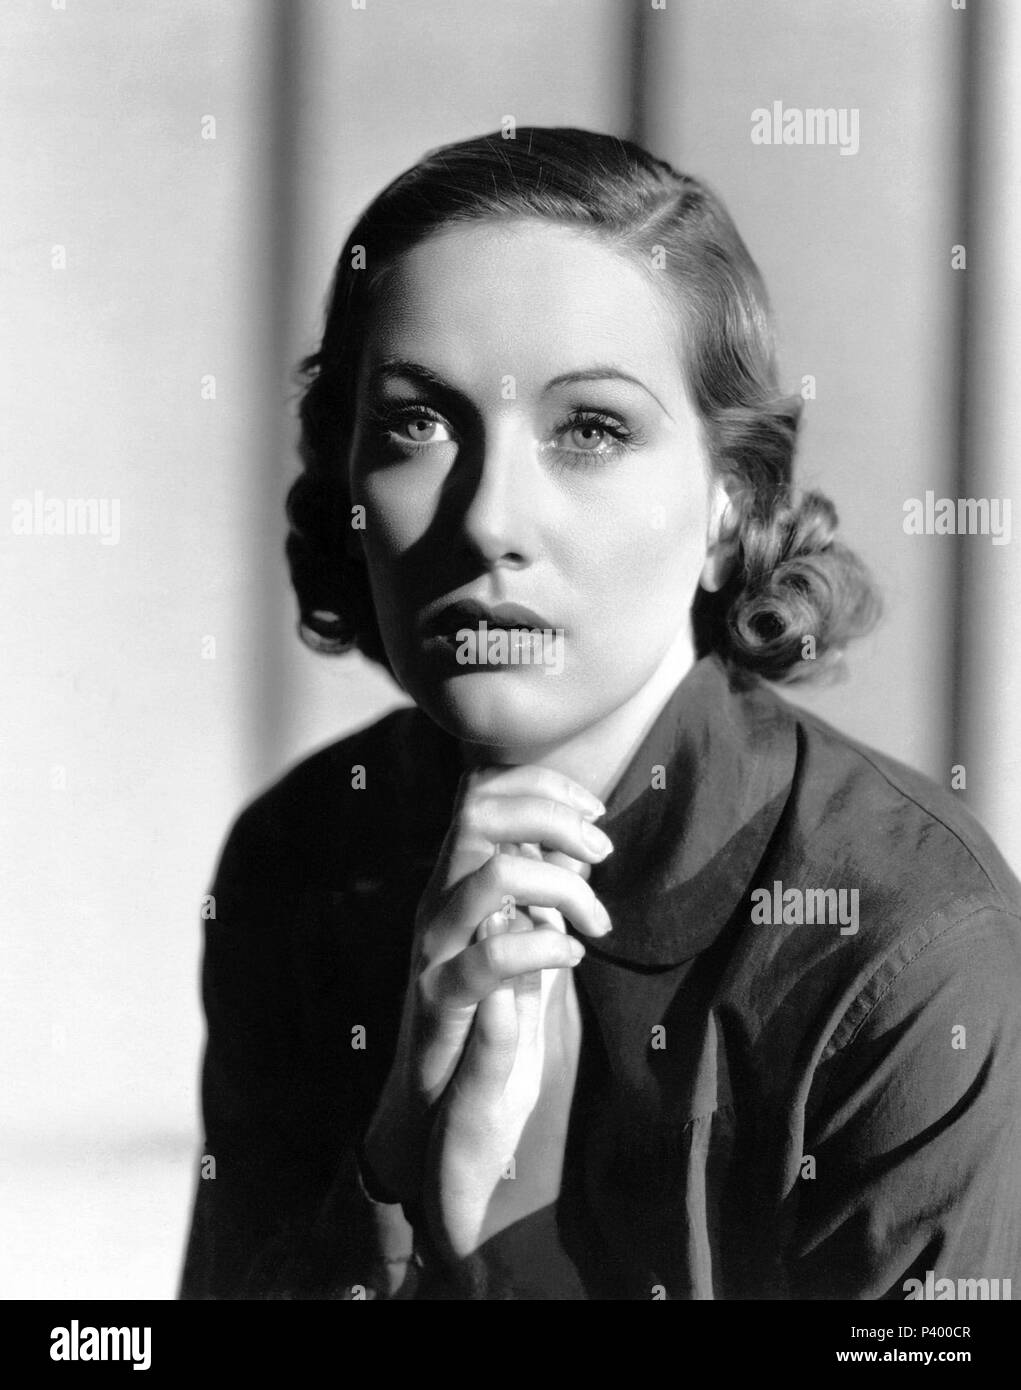 Original Film Title: SHE'S DANGEROUS.  English Title: SHE'S DANGEROUS.  Film Director: LEWIS R. FOSTER; MILTON CARRUTH.  Year: 1937.  Stars: TALA BIRELL. Credit: UNIVERSAL PICTURES / Album Stock Photo